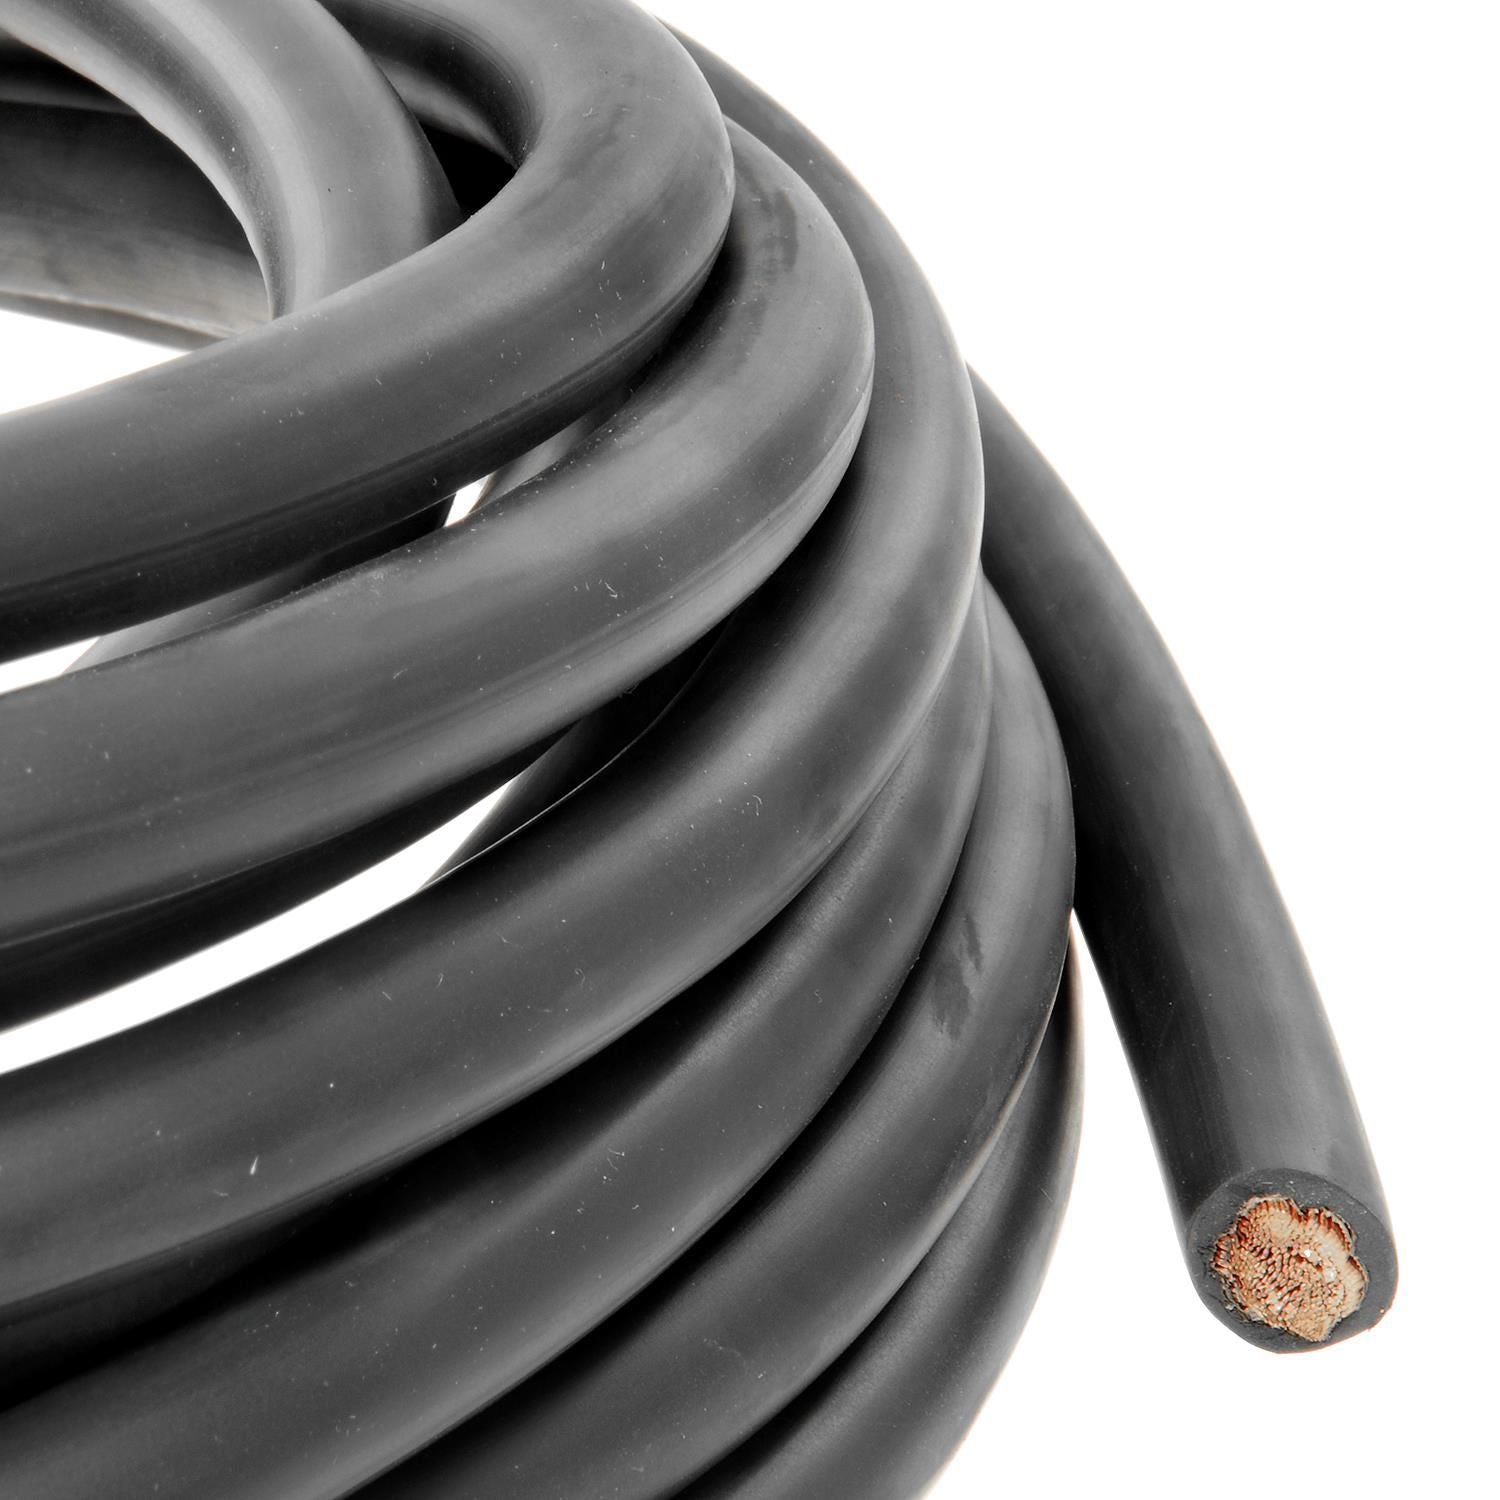 YSP CB6BK-50 Wells Bulk Cable (Black, 50', 1G)